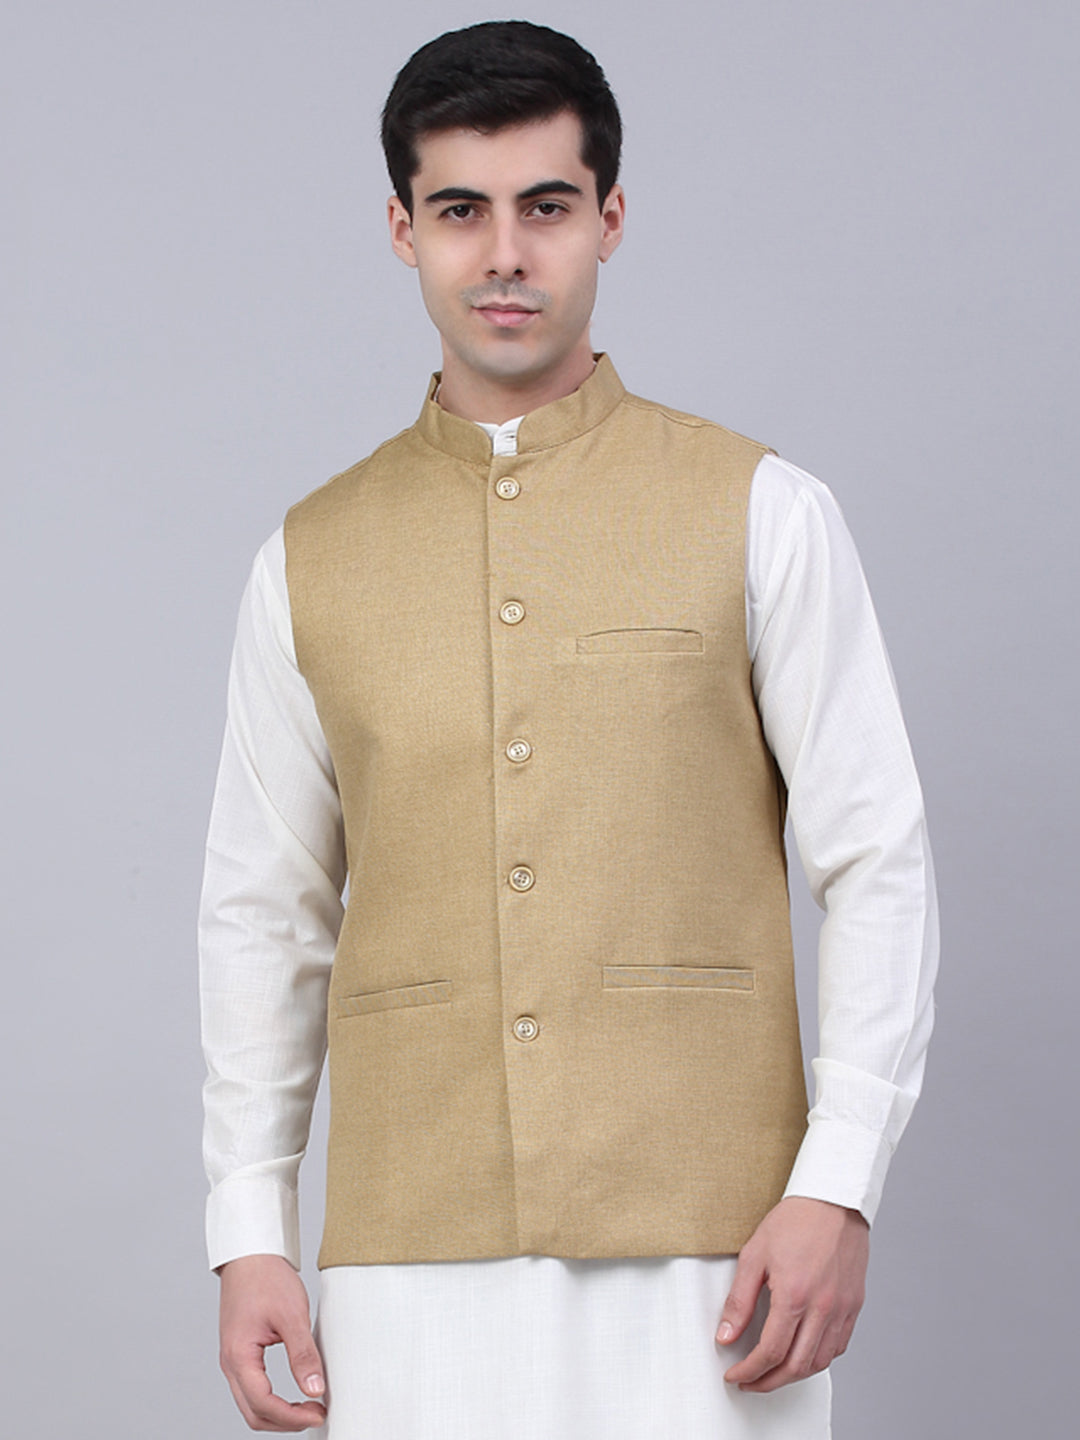 Embroidered Rayon Nehru Jacket in Cream : MHG2430